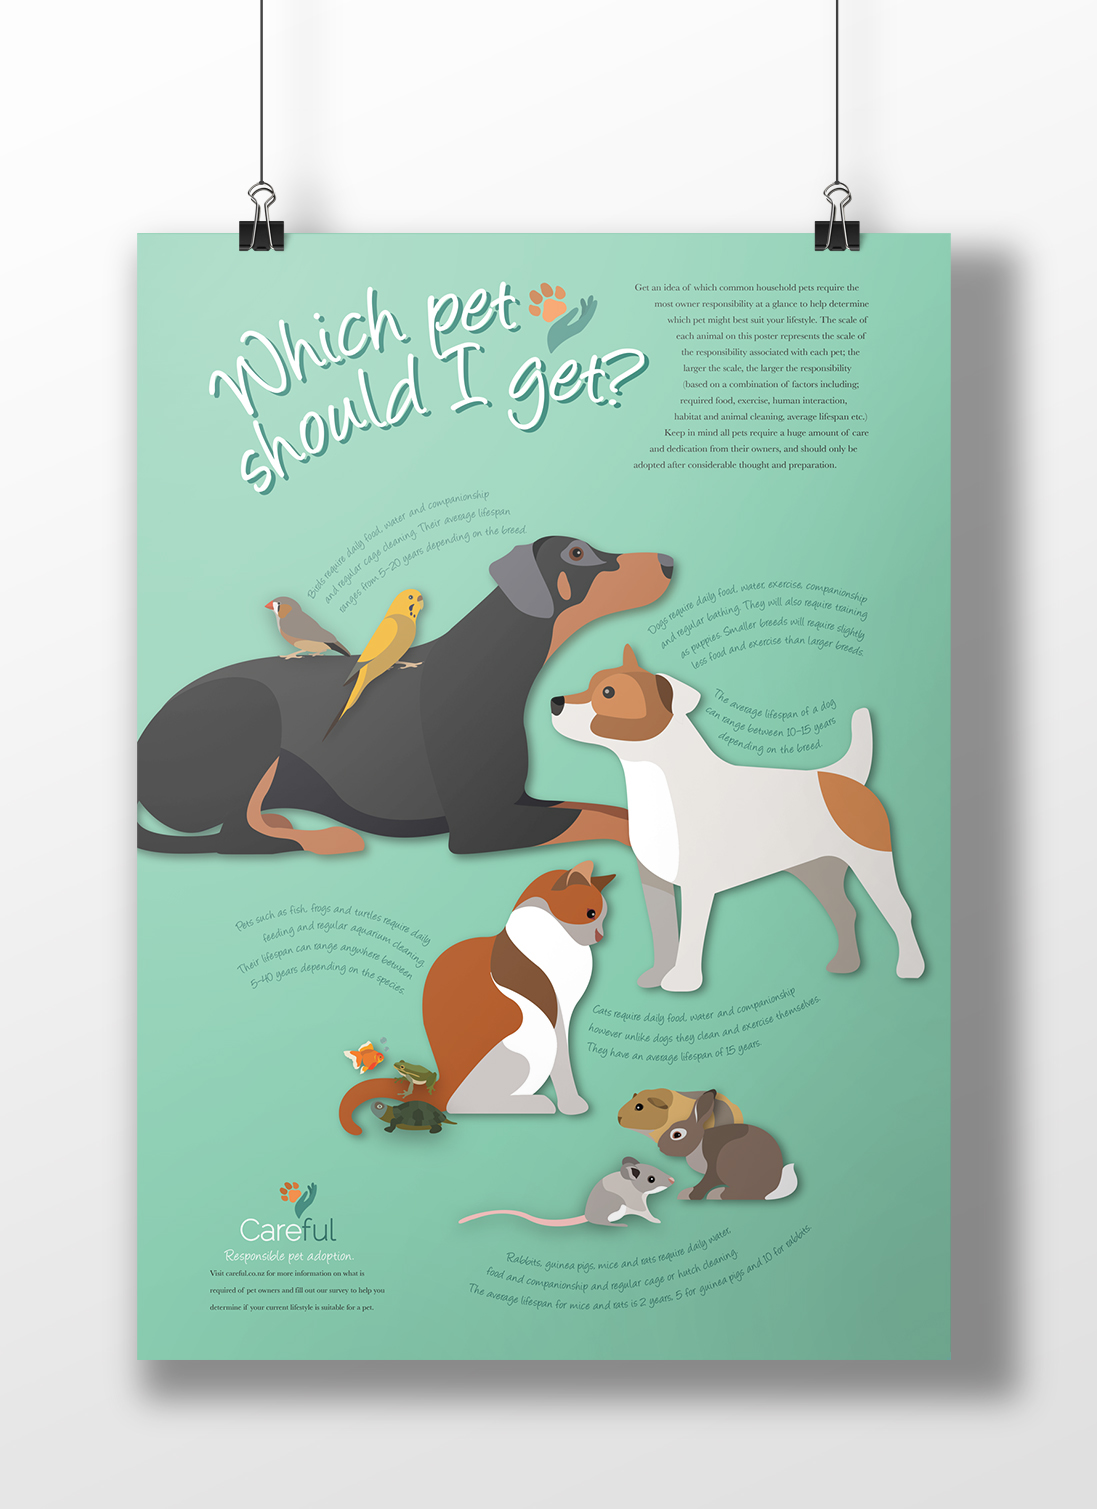 animals adoption pets shelter responsible careful campaign iphone macbook Web print online offline CPIT